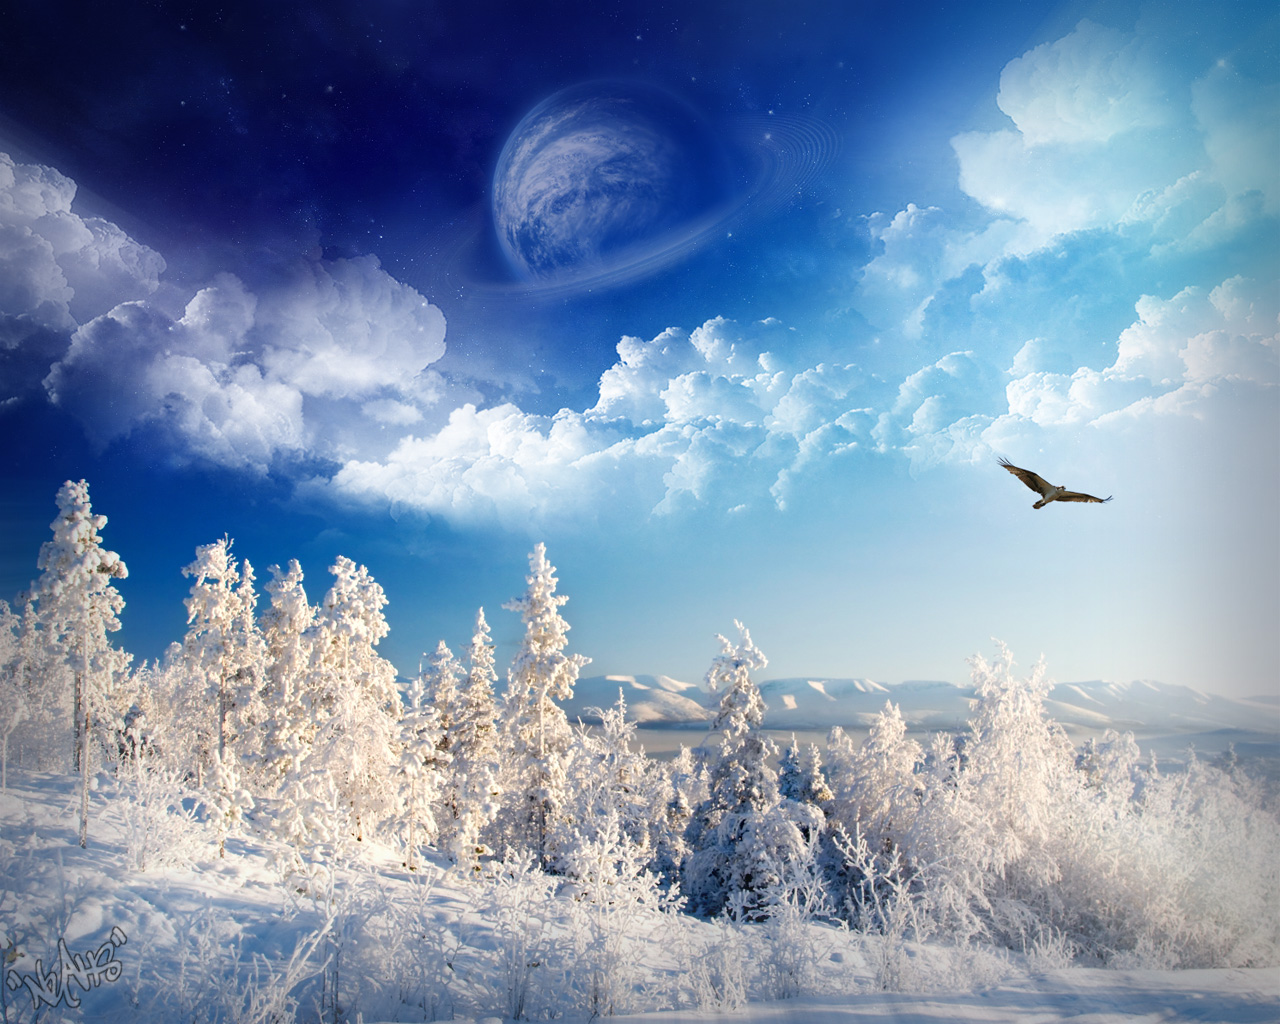 animated winter wonderland photos